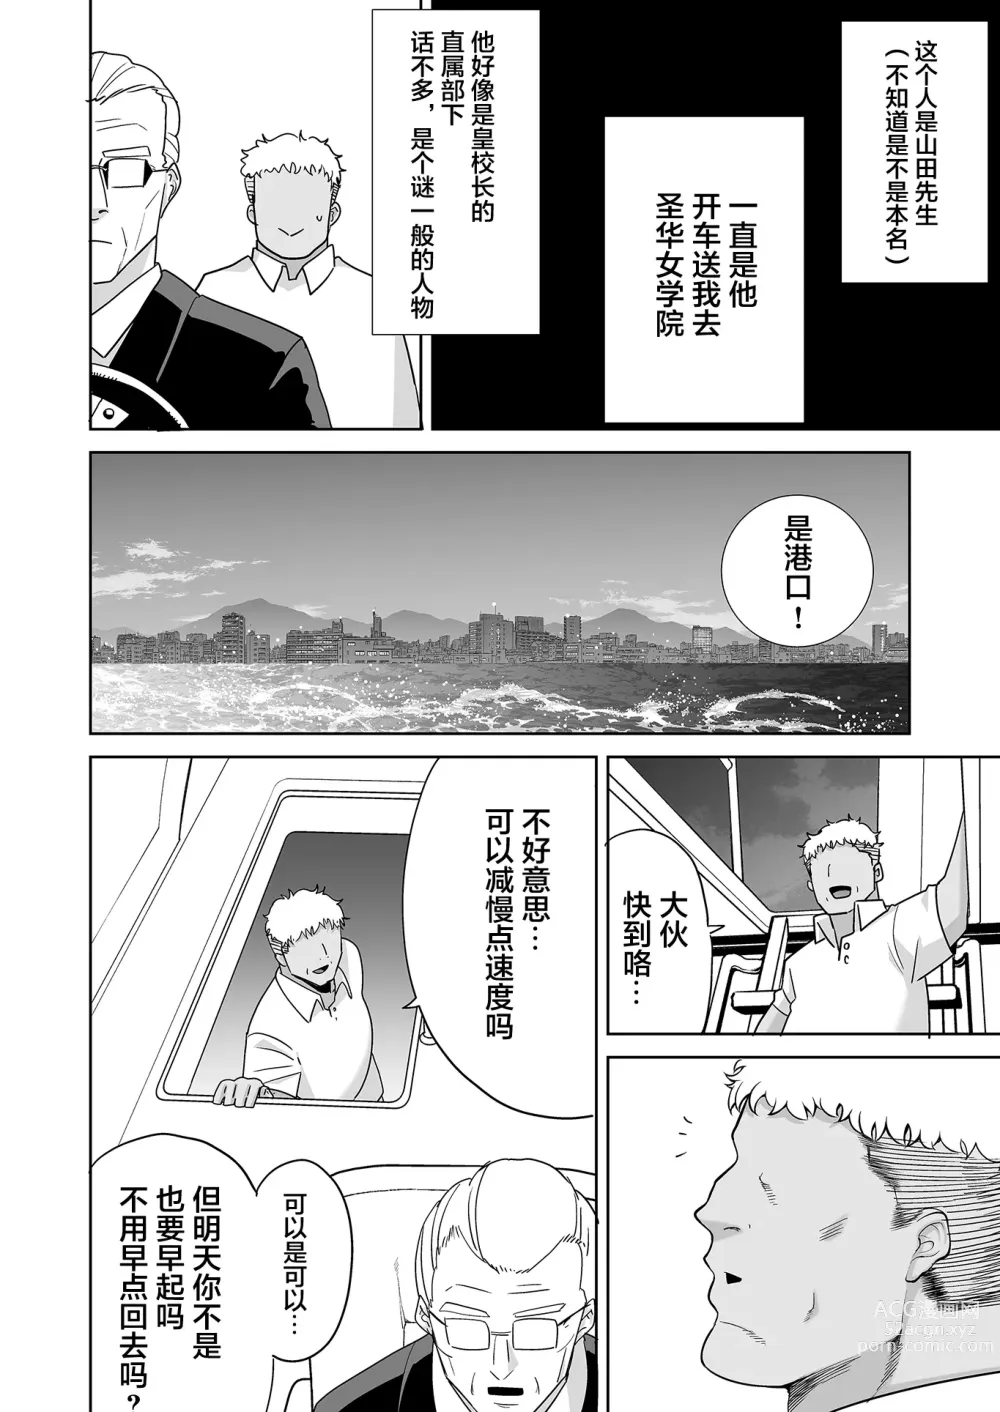 Page 269 of doujinshi 聖華女学院公認竿おじさん1-6